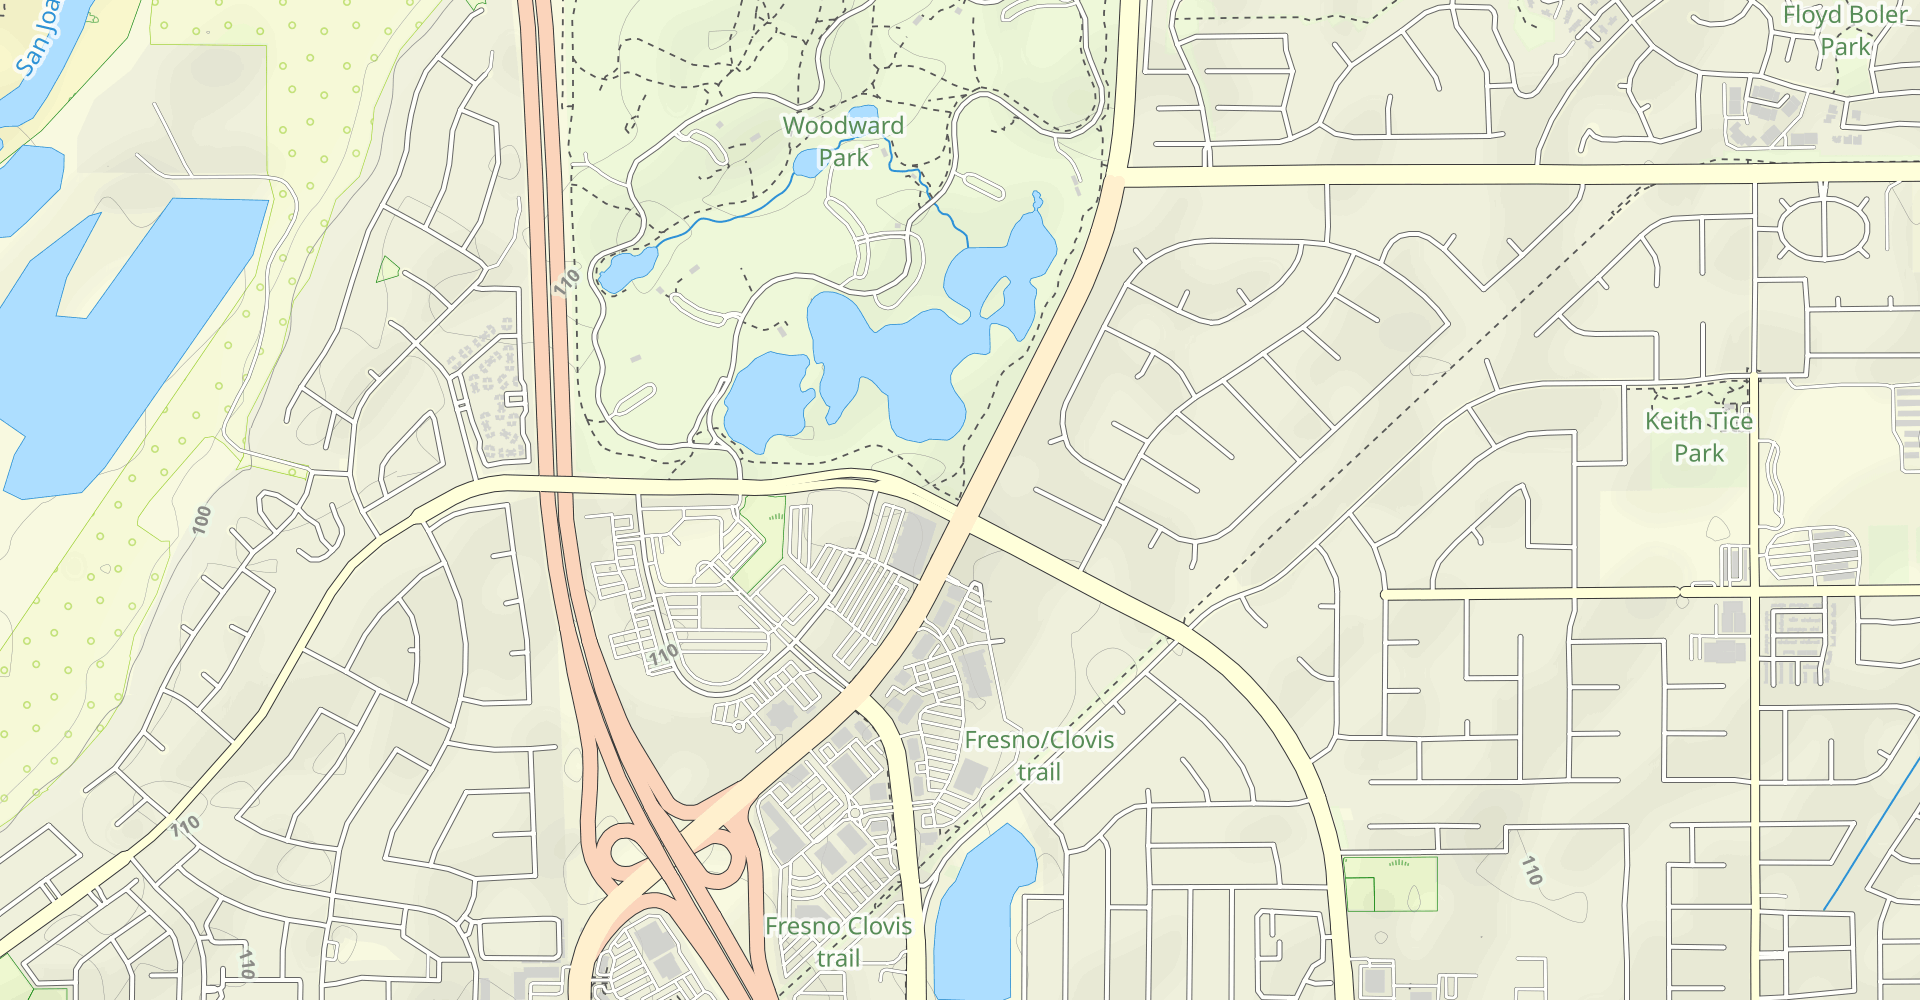 Woodward Park Loop